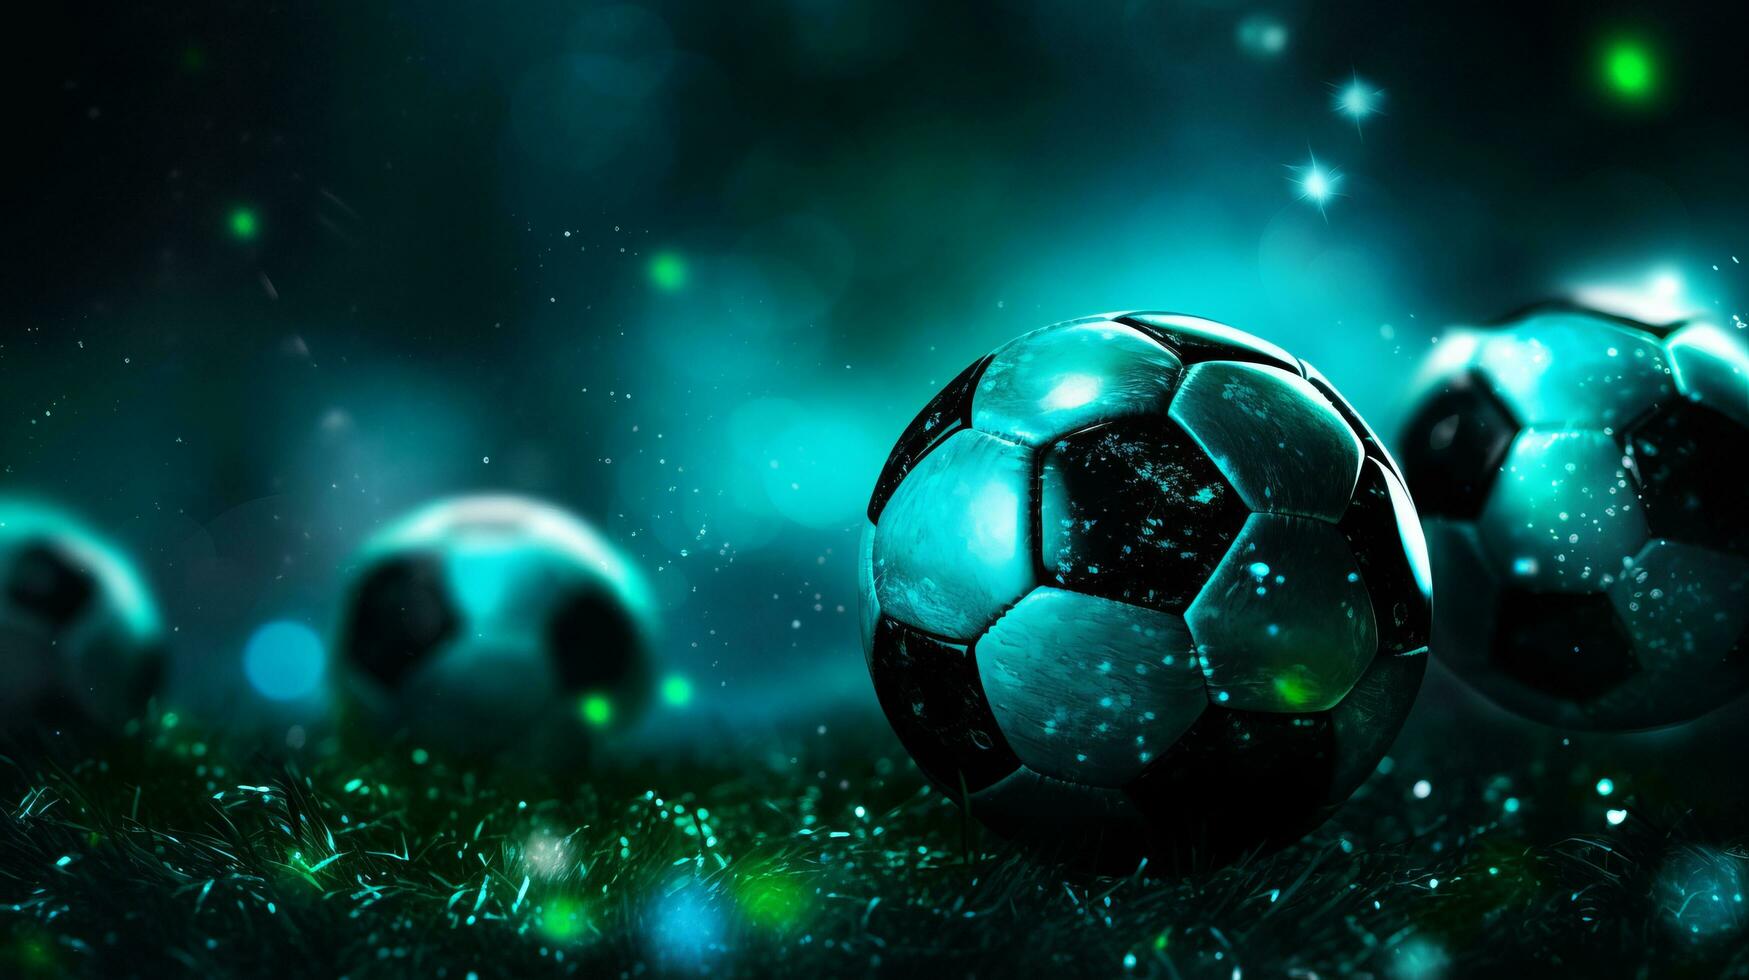 Green soccer sport background photo